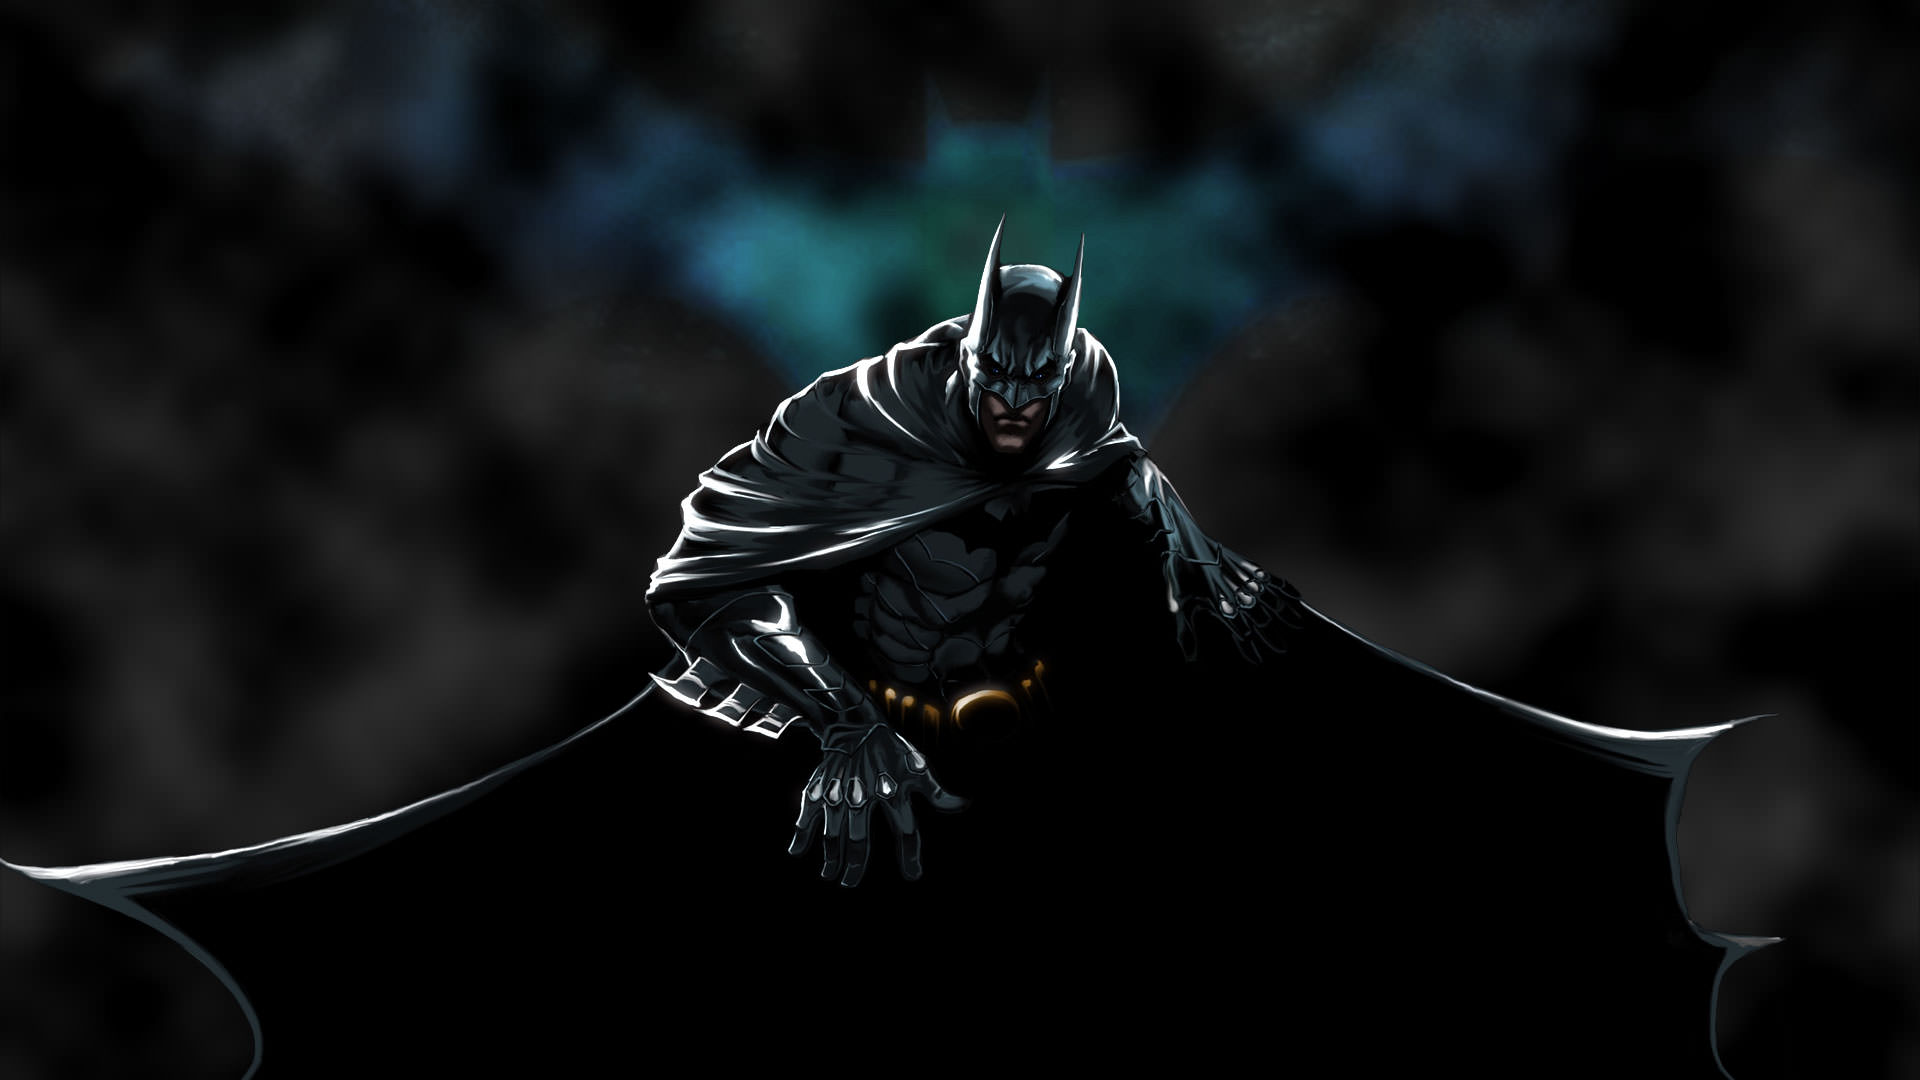  Batman Wallpapers Backgrounds Images Design